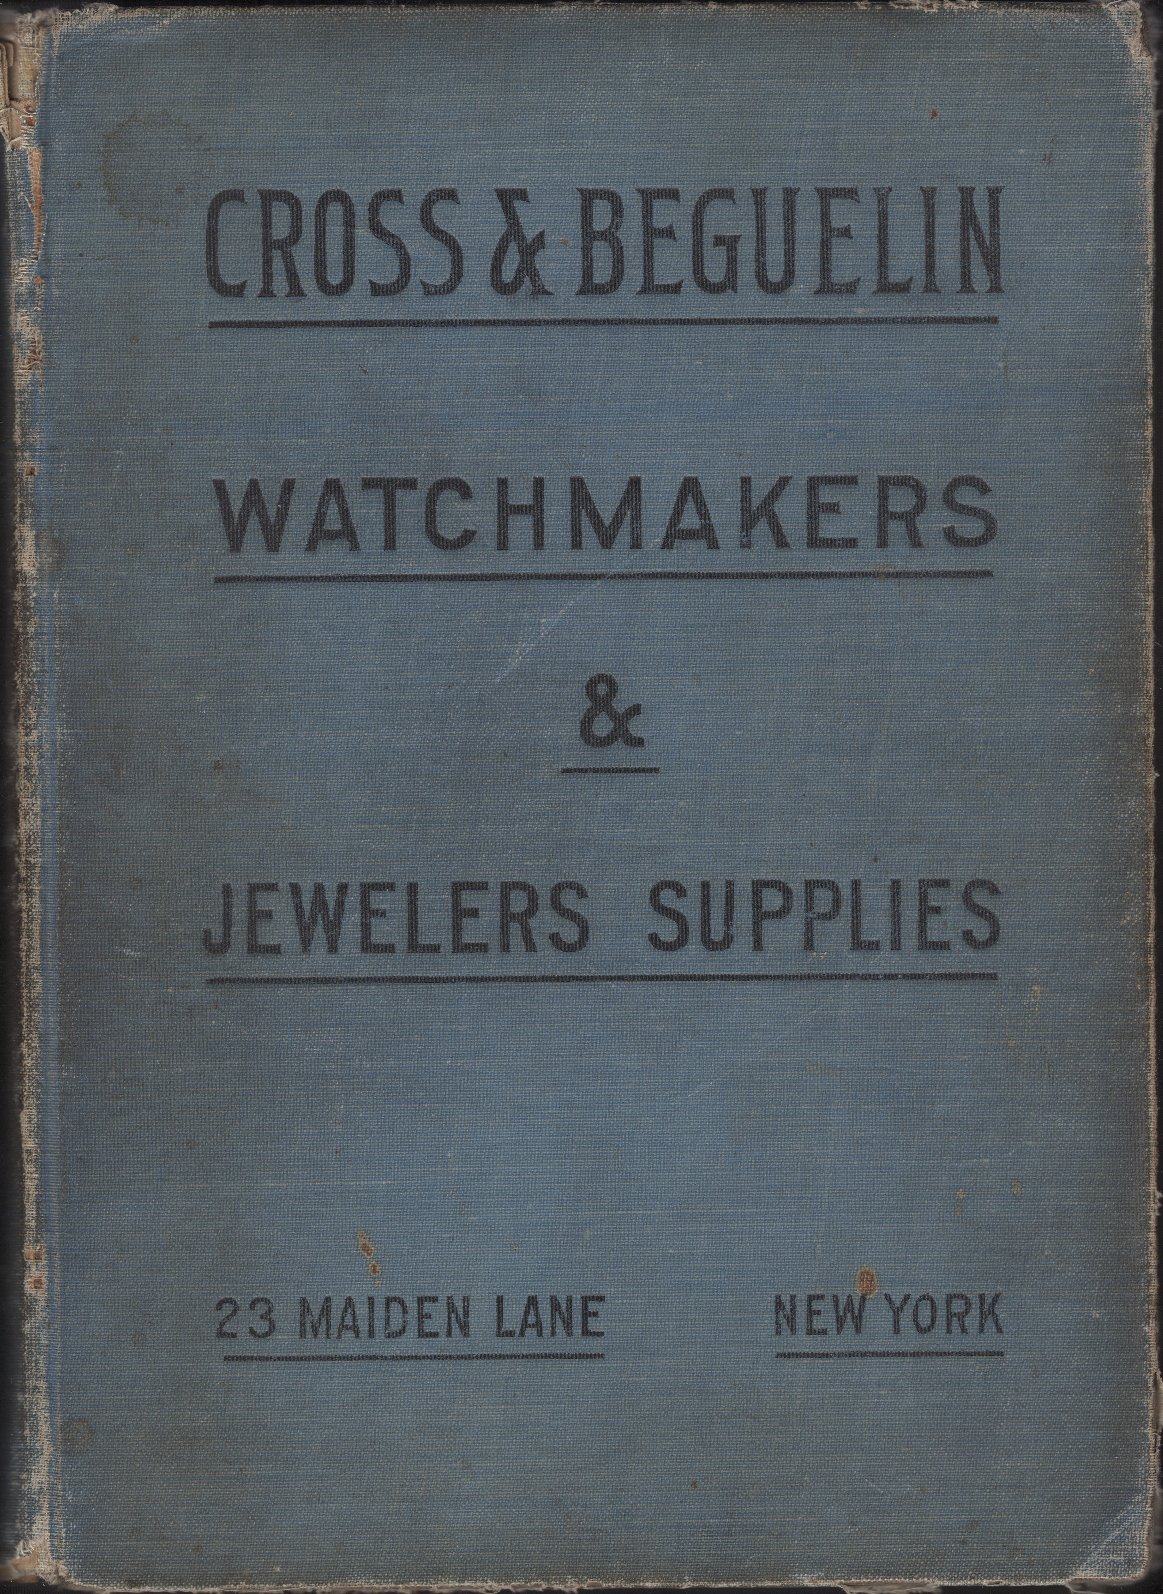 1910 Cross & Beguelin: Hamilton Parts Material Catalog Cover Image